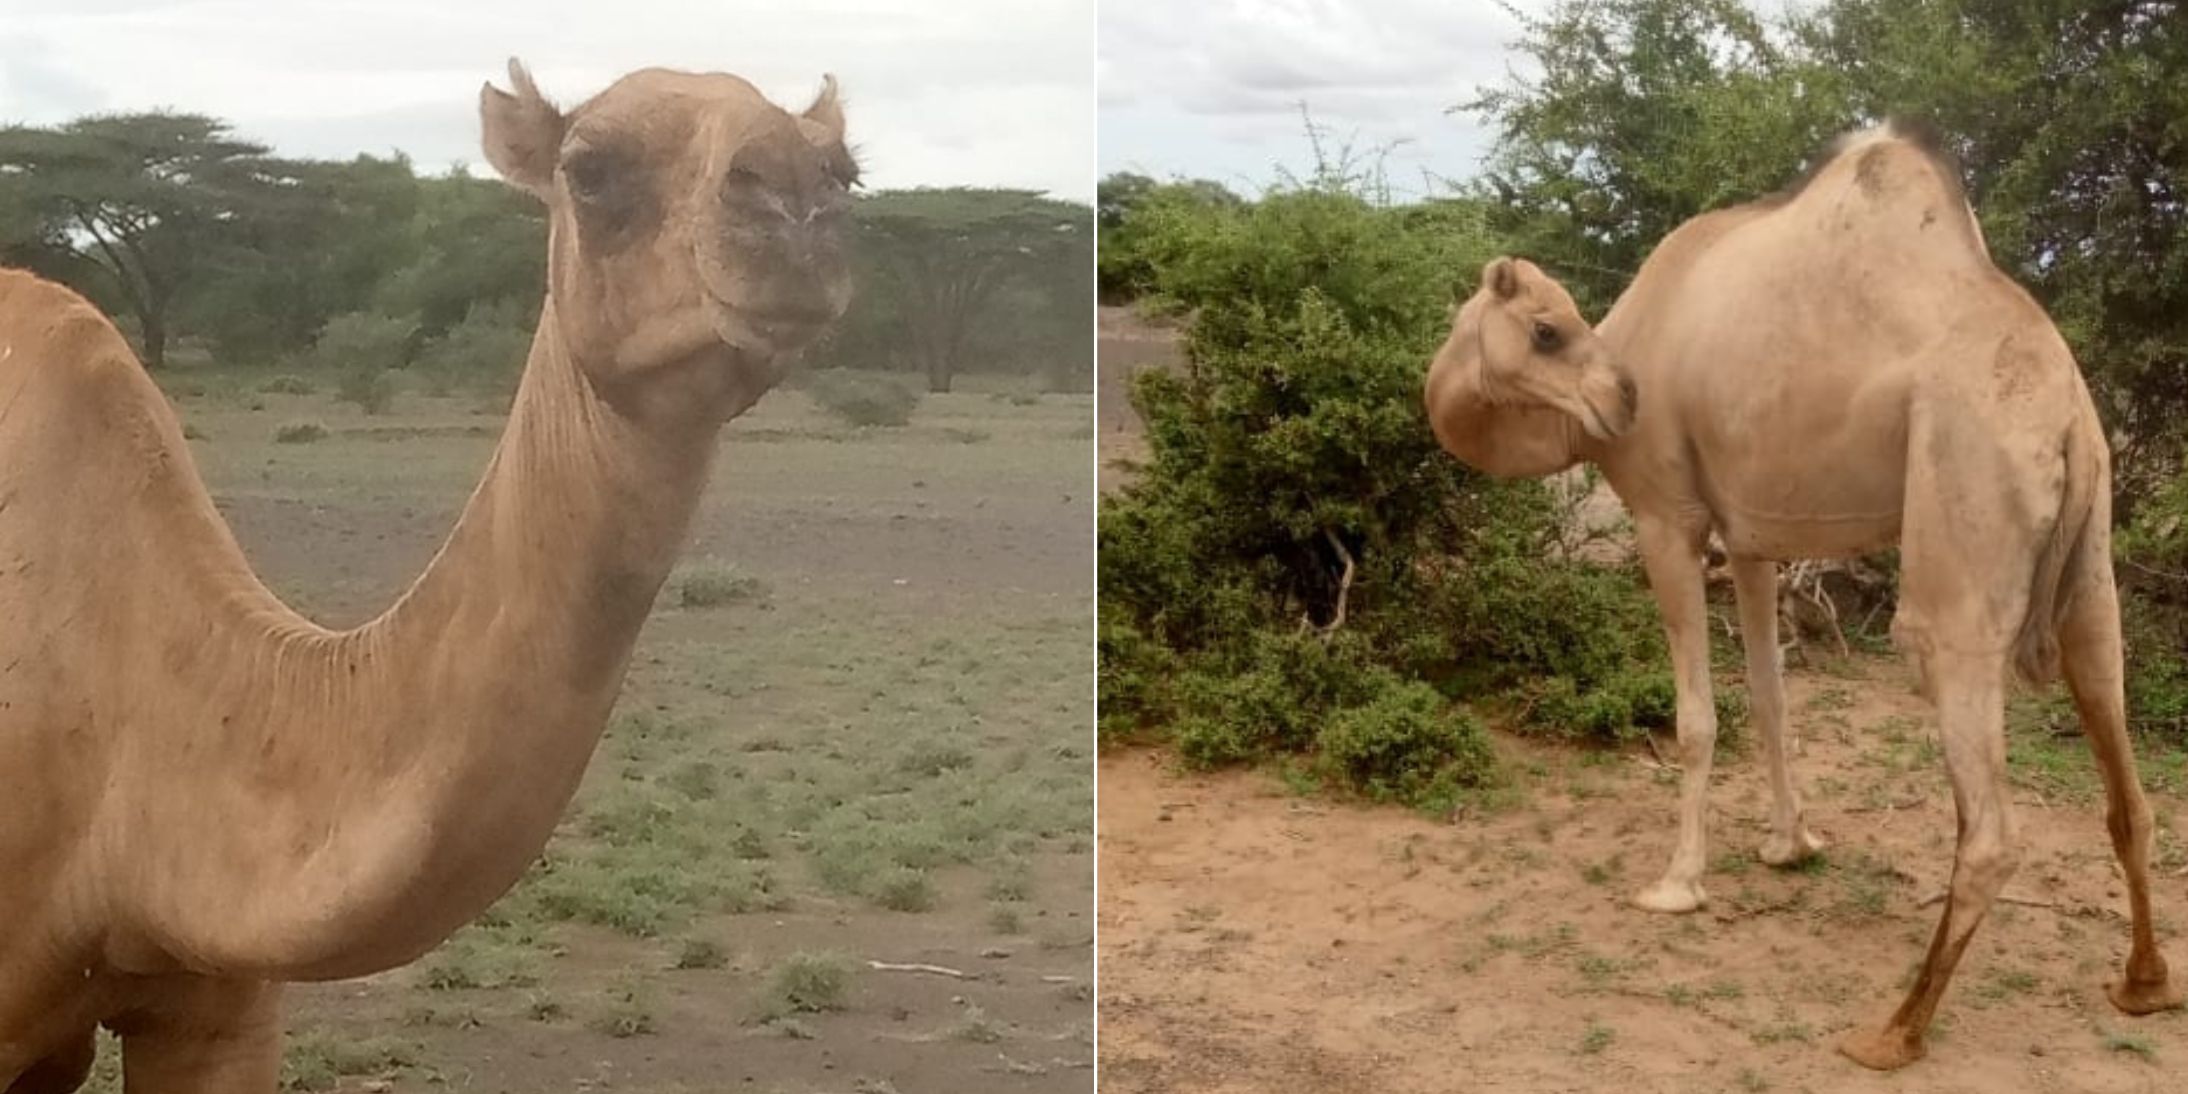 Outbreak of mysterious diseases killing camels worries Marsabit pastoralists